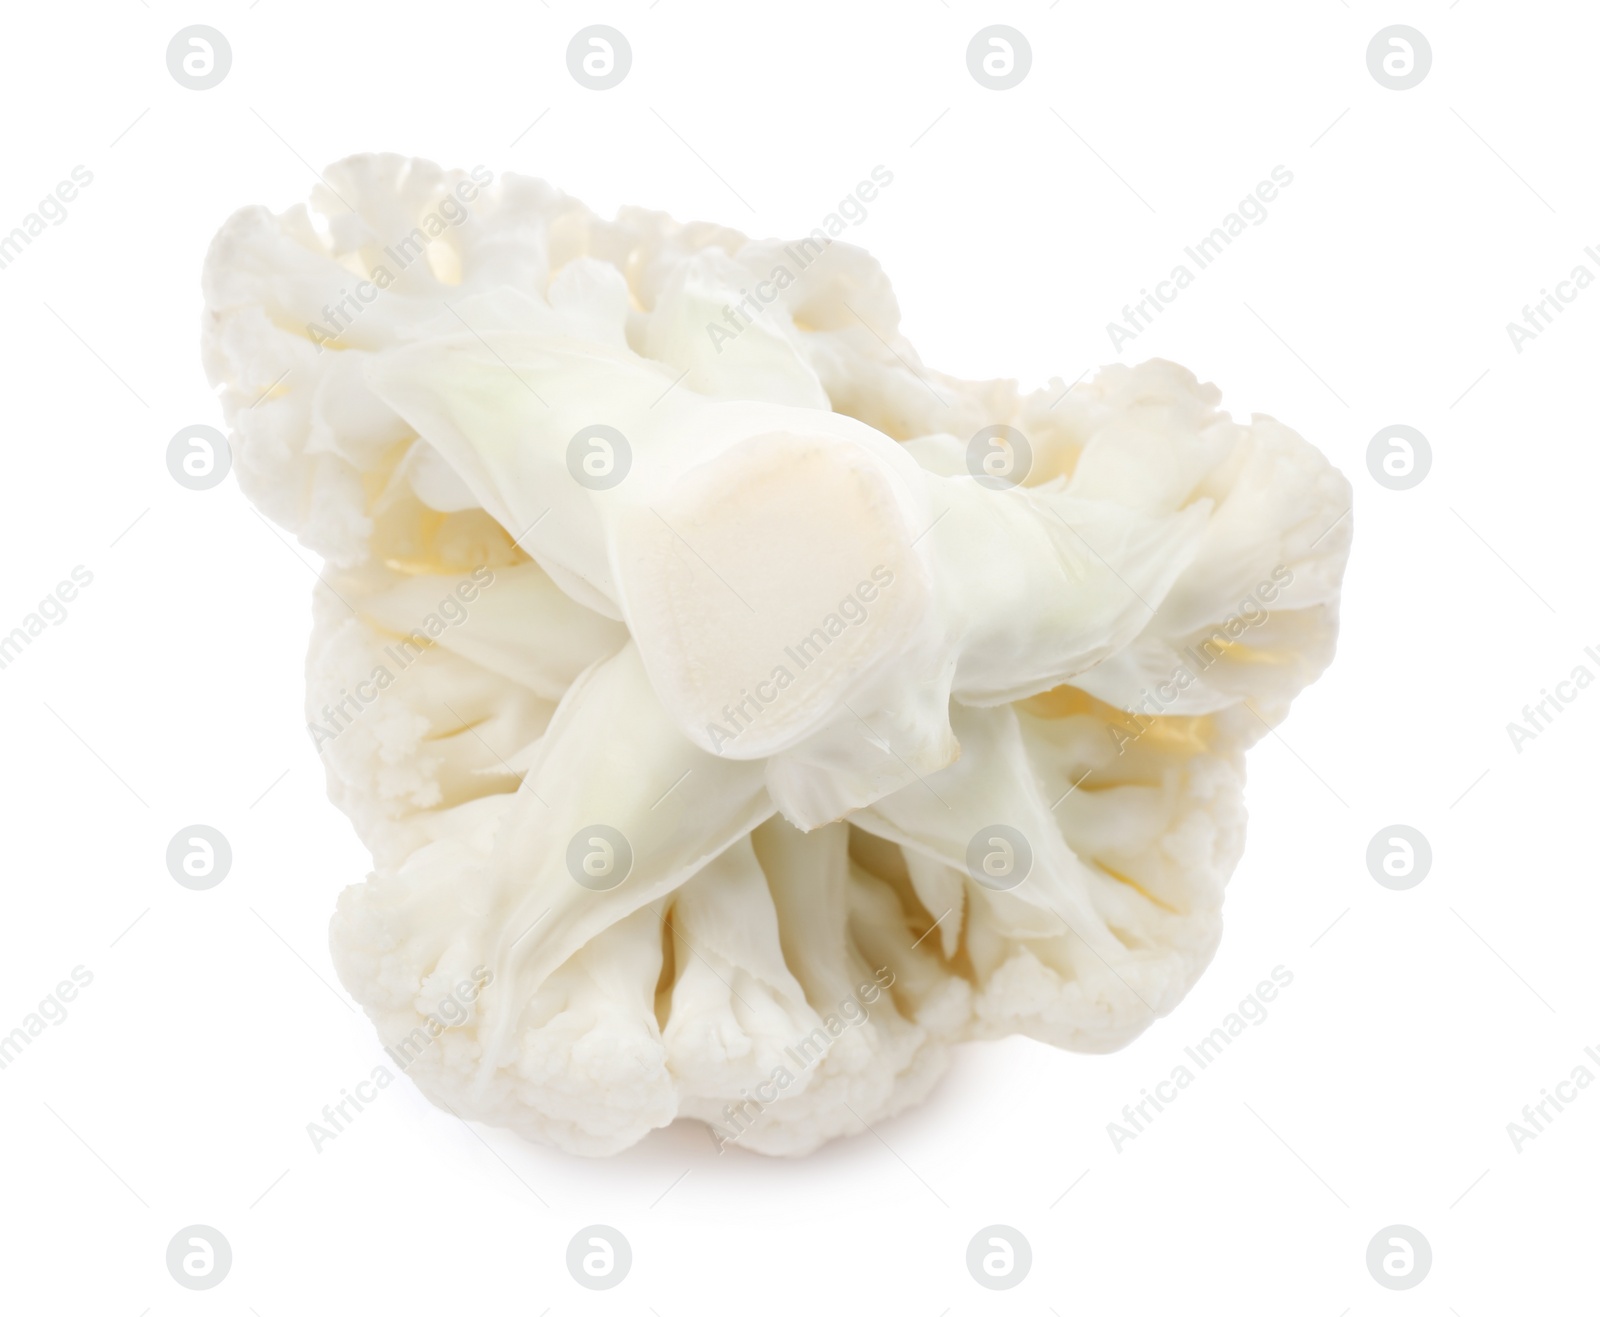 Photo of Cut fresh raw cauliflower on white background, top view